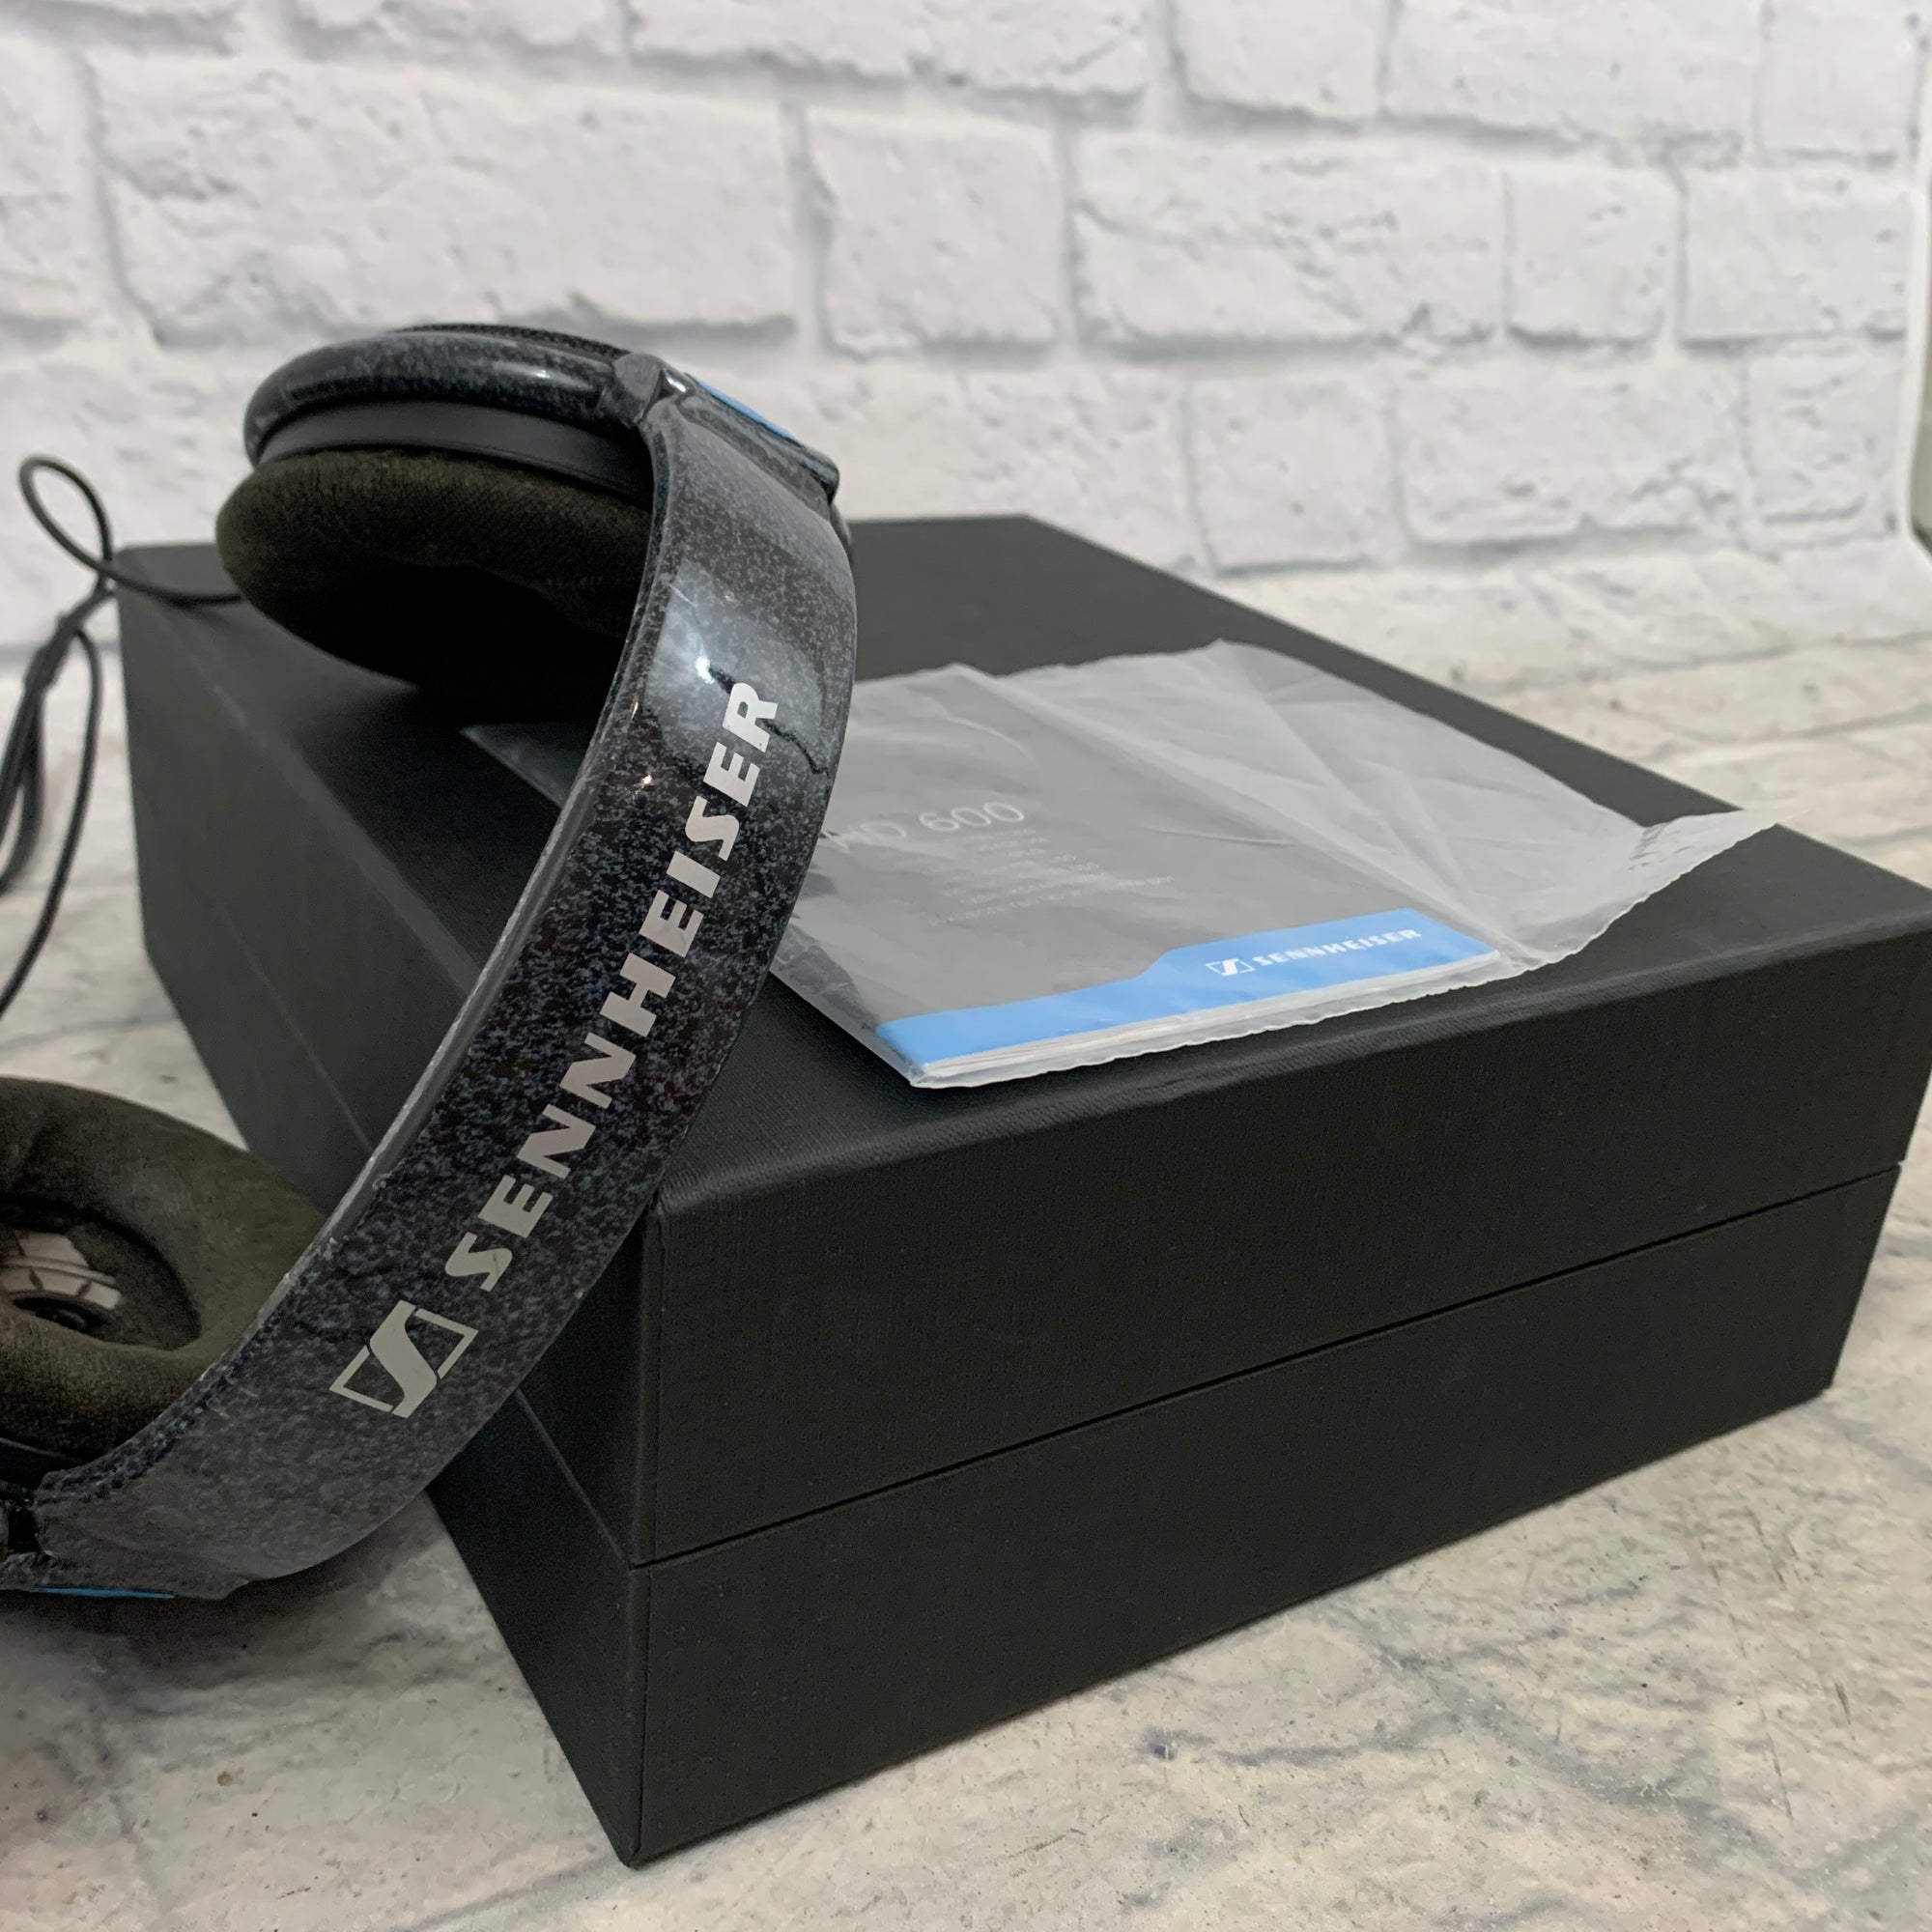 Sennheiser HD 600 Professional Headphones